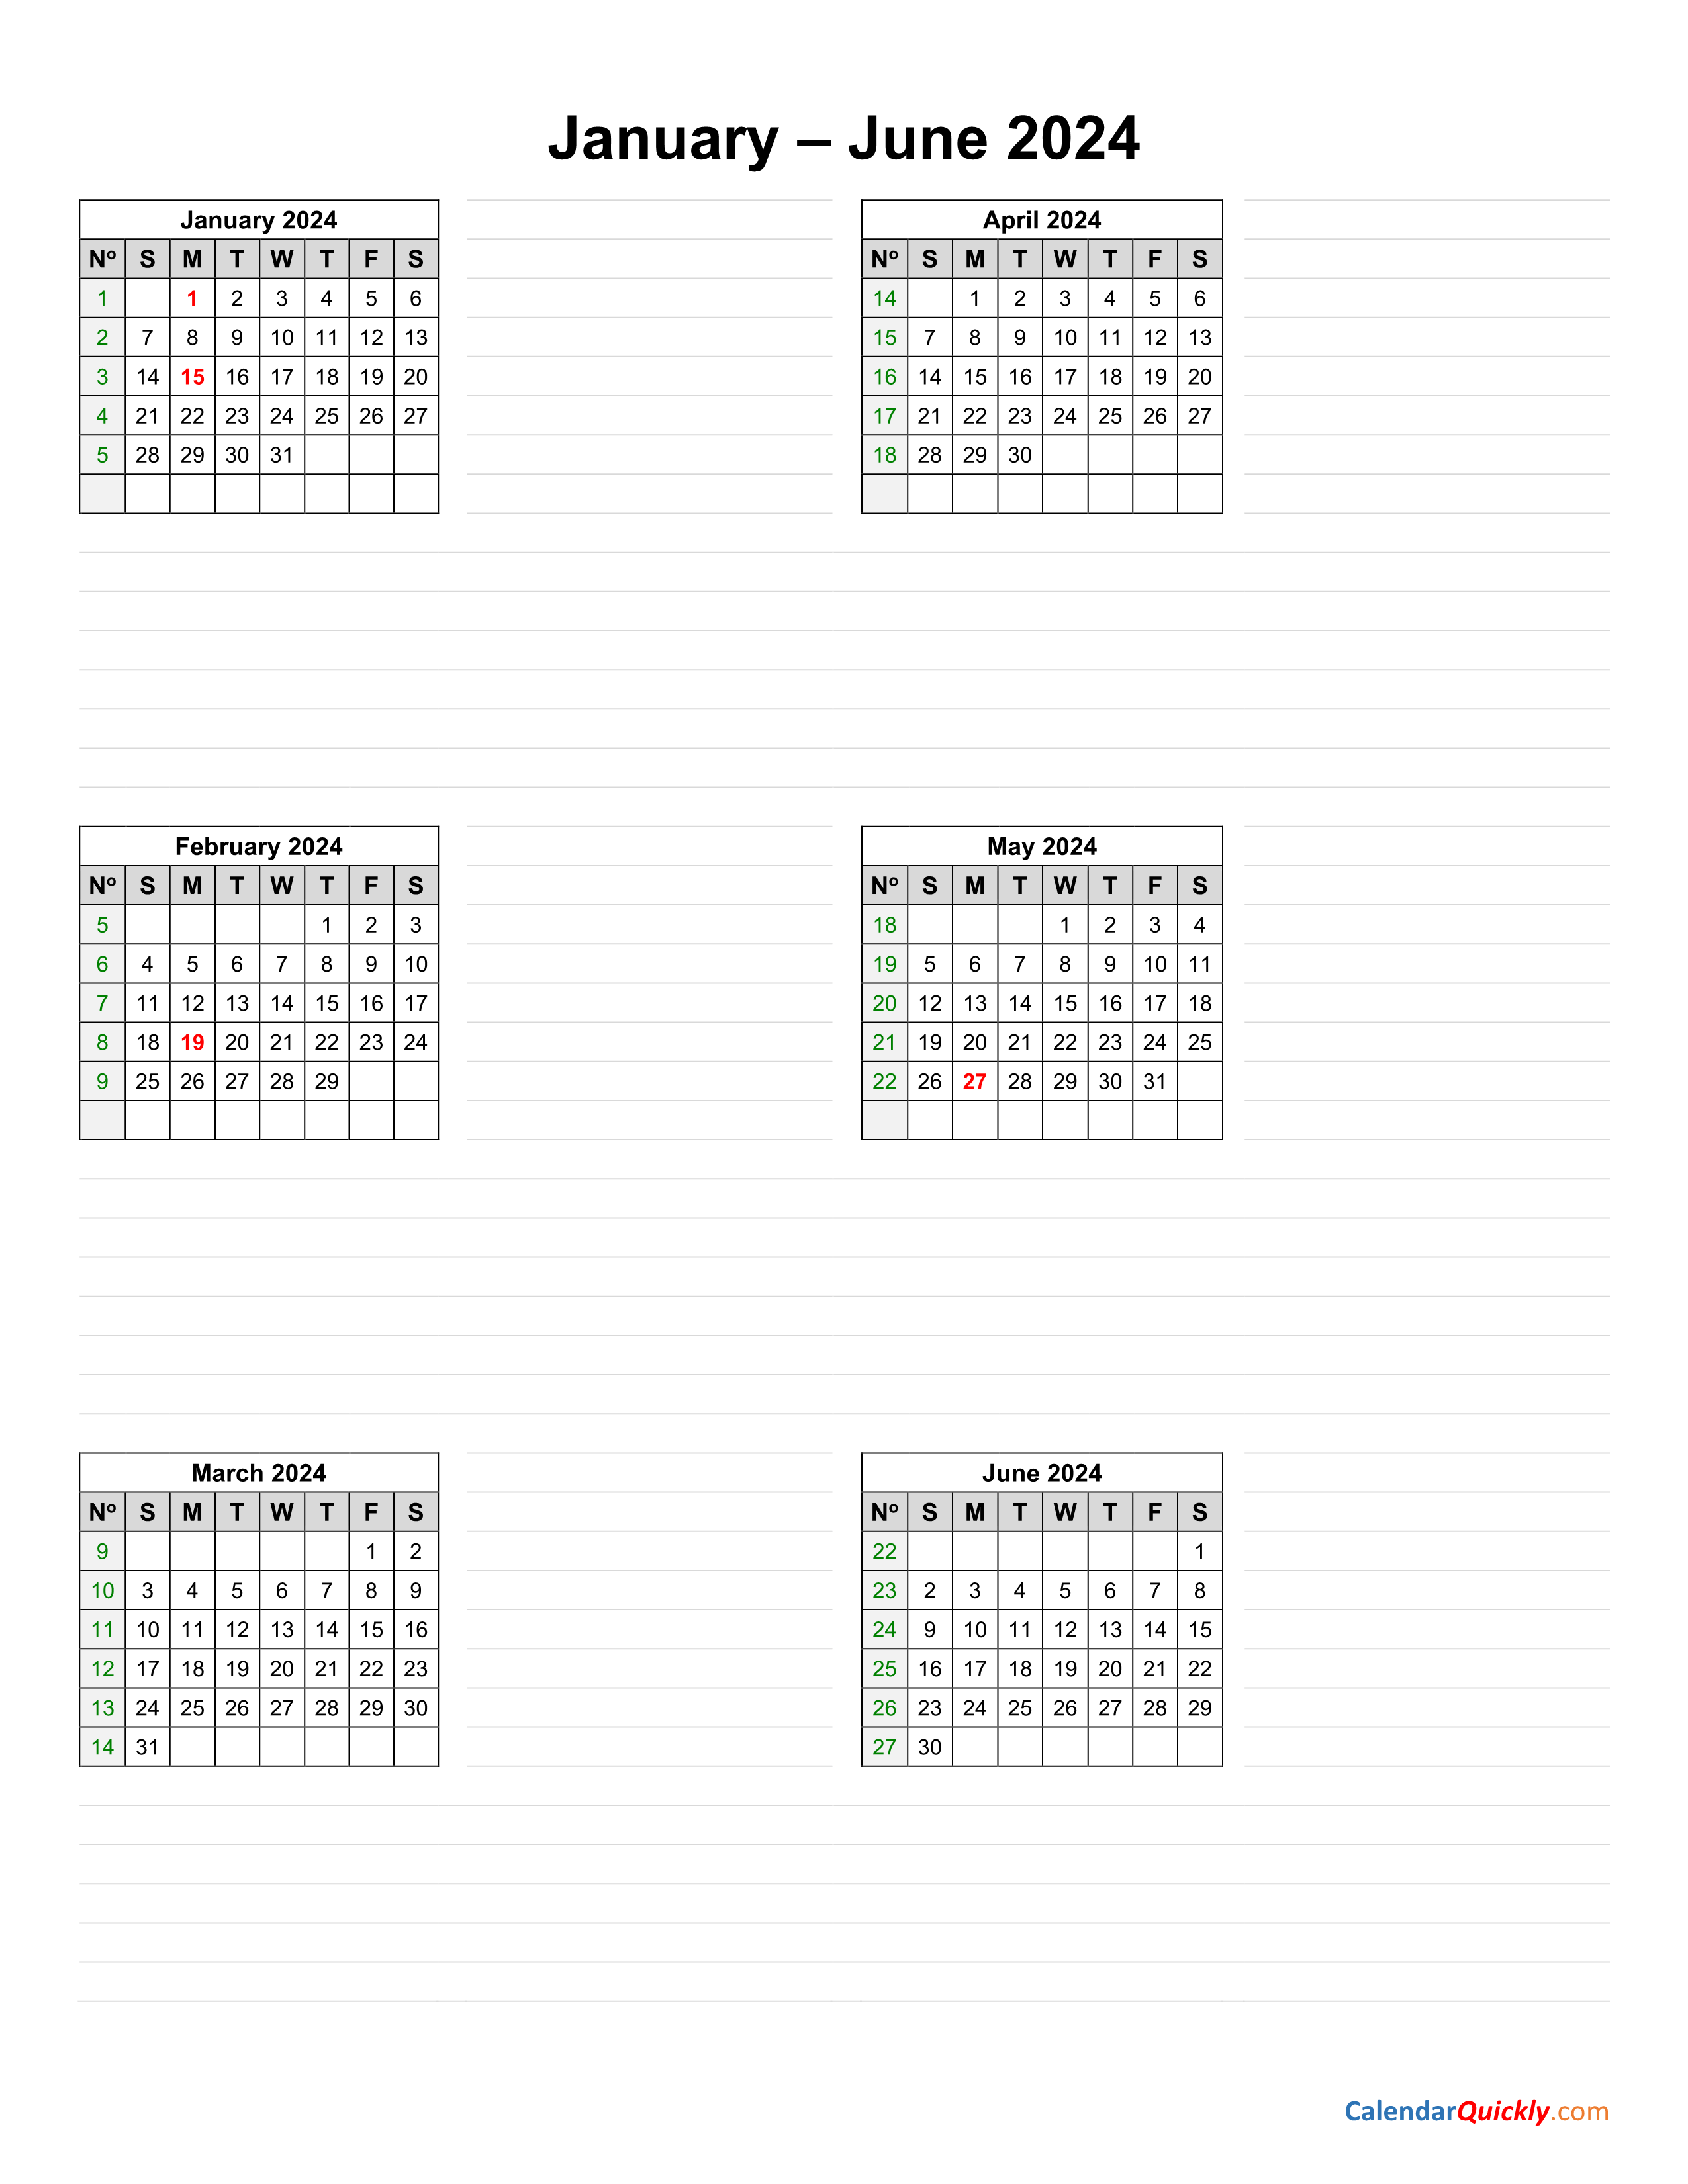 January to June 2024 Calendar Vertical  Calendar Quickly